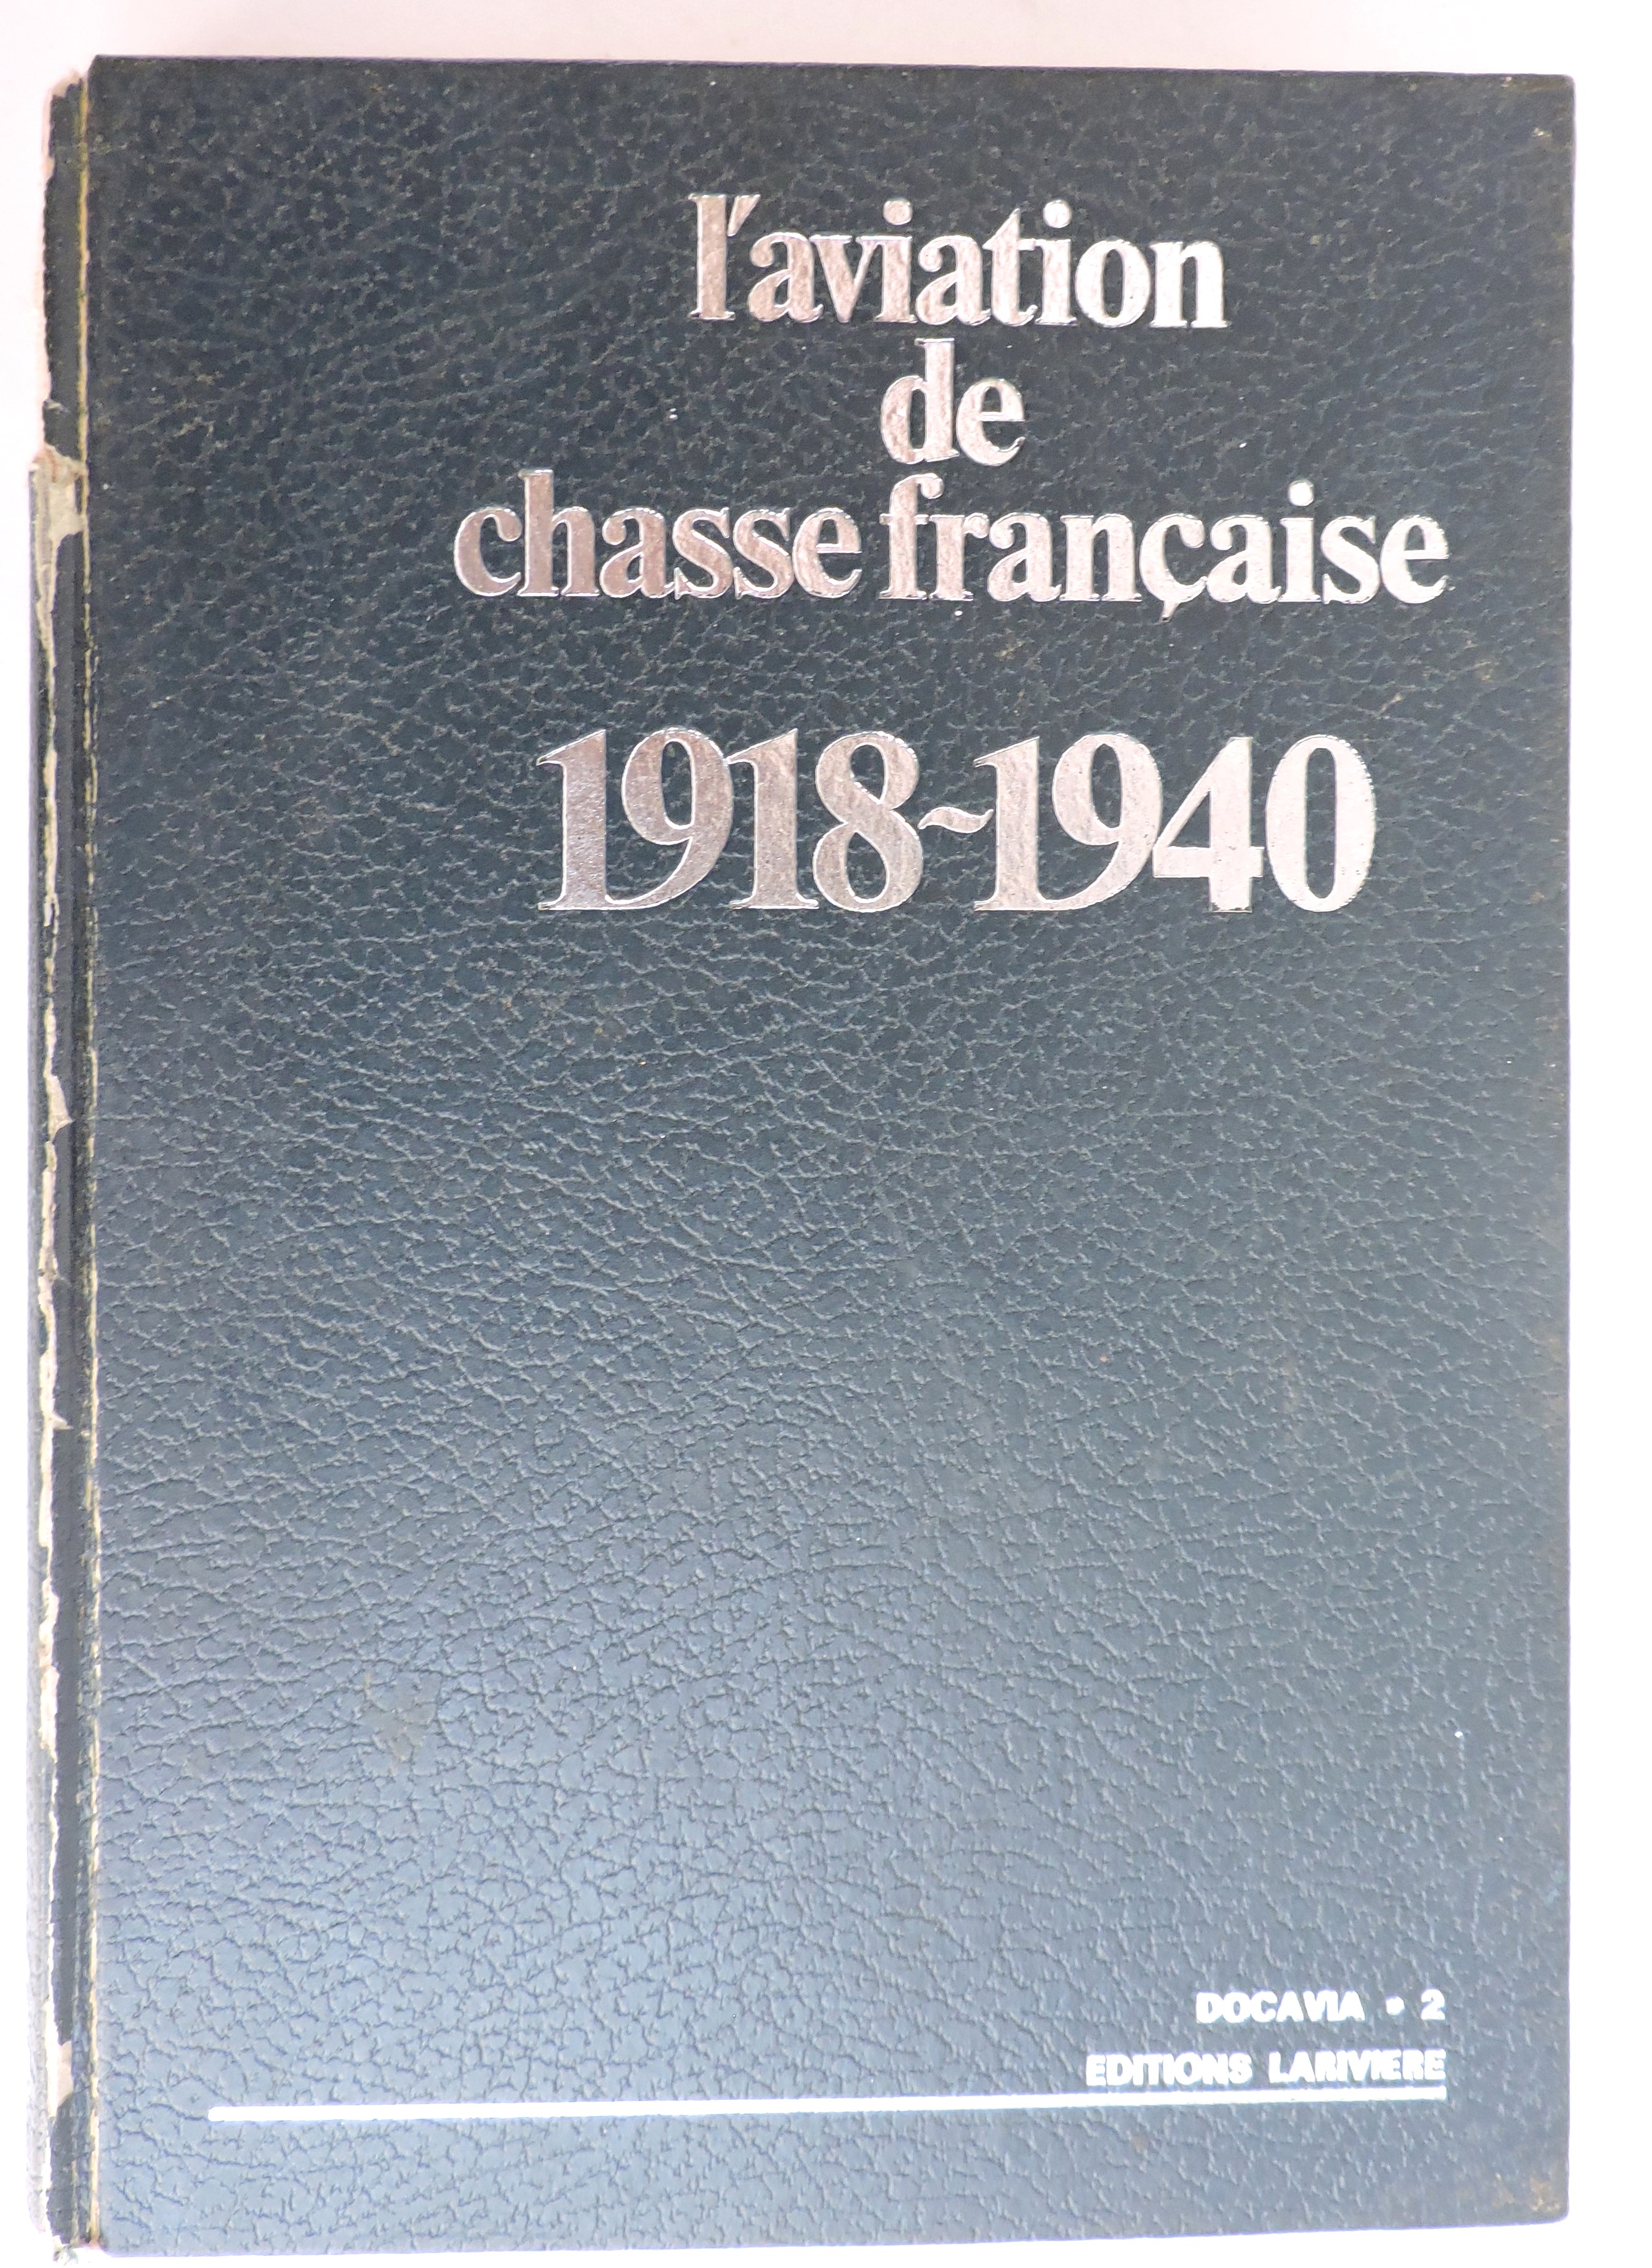 L'aviation de chasse française 1918 - 1940  Cuny & Danel  Docavia N°2